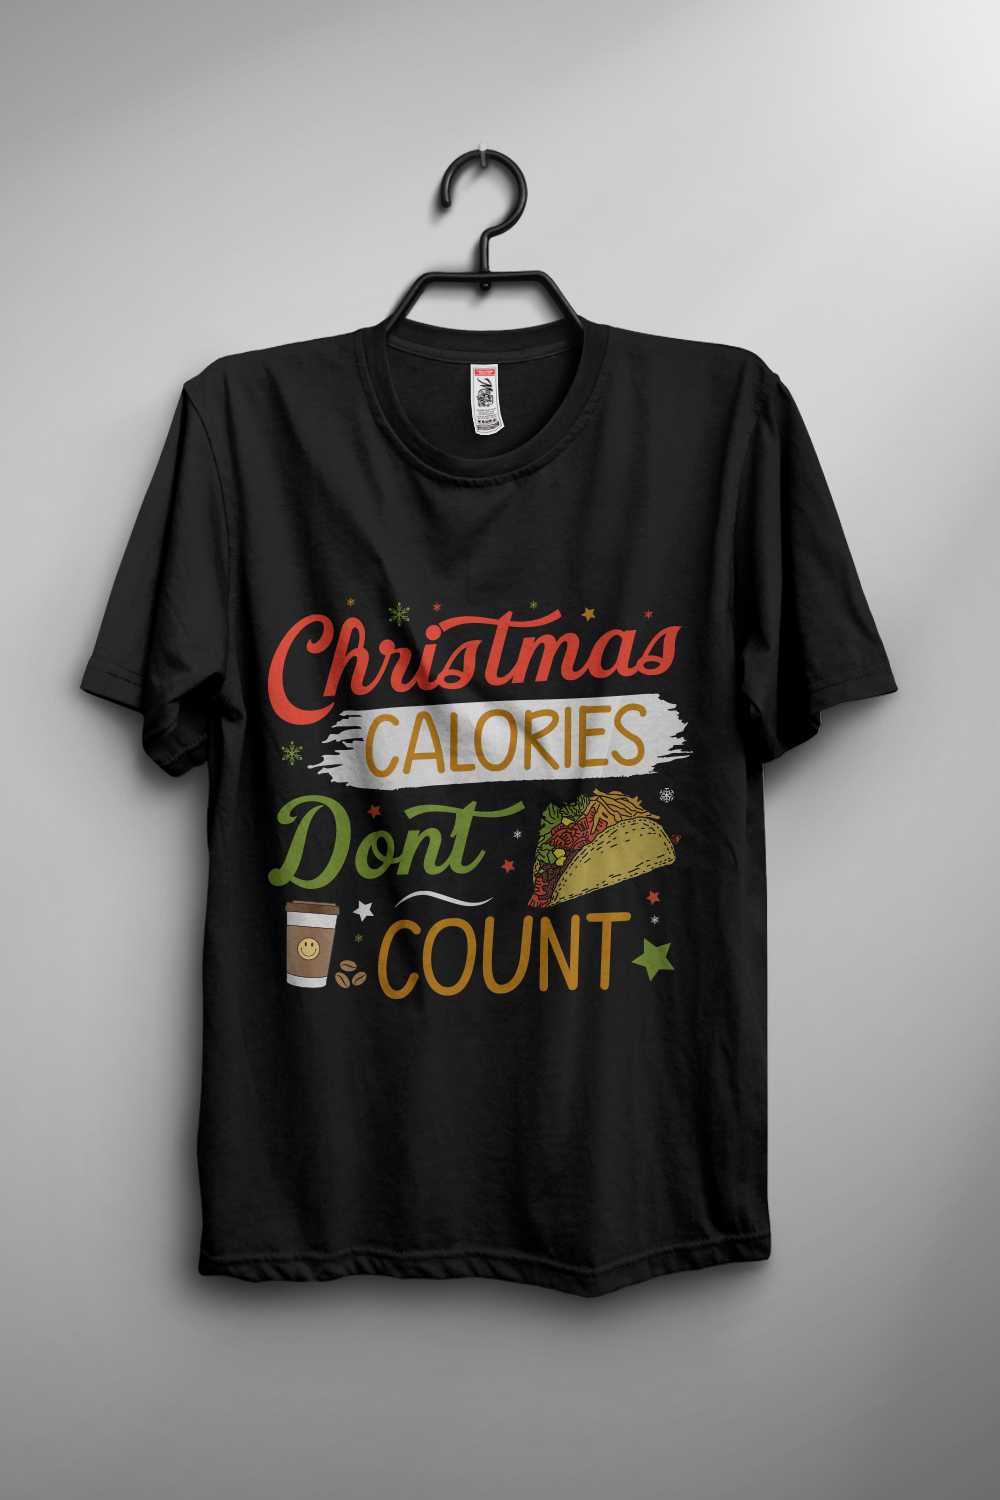 Christmas calories don't count design pinterest preview image.